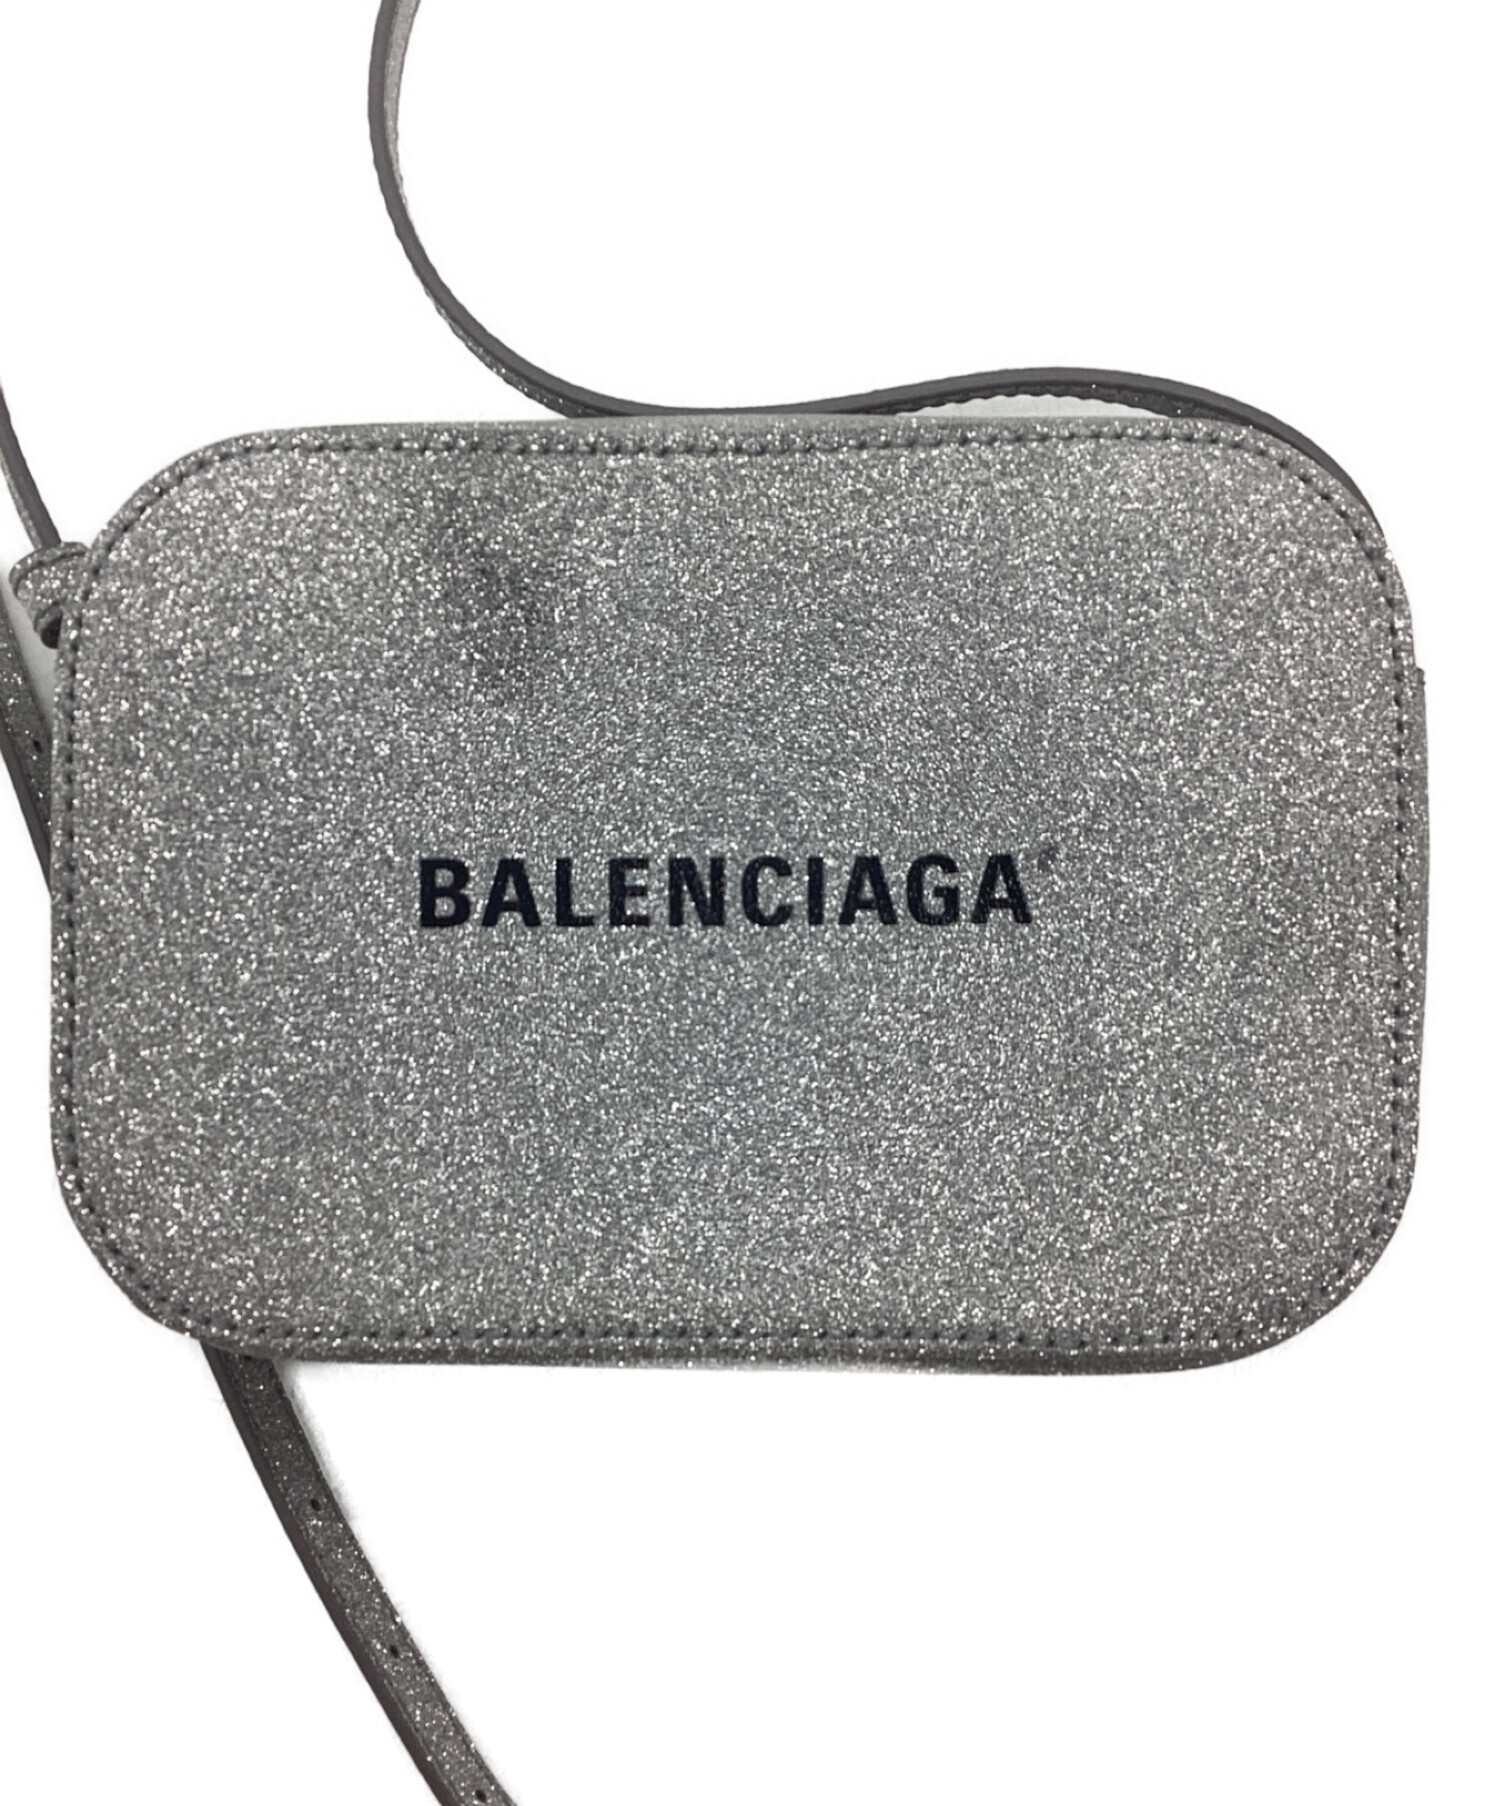 BALENCIAGA (バレンシアガ) ショルダーバッグ